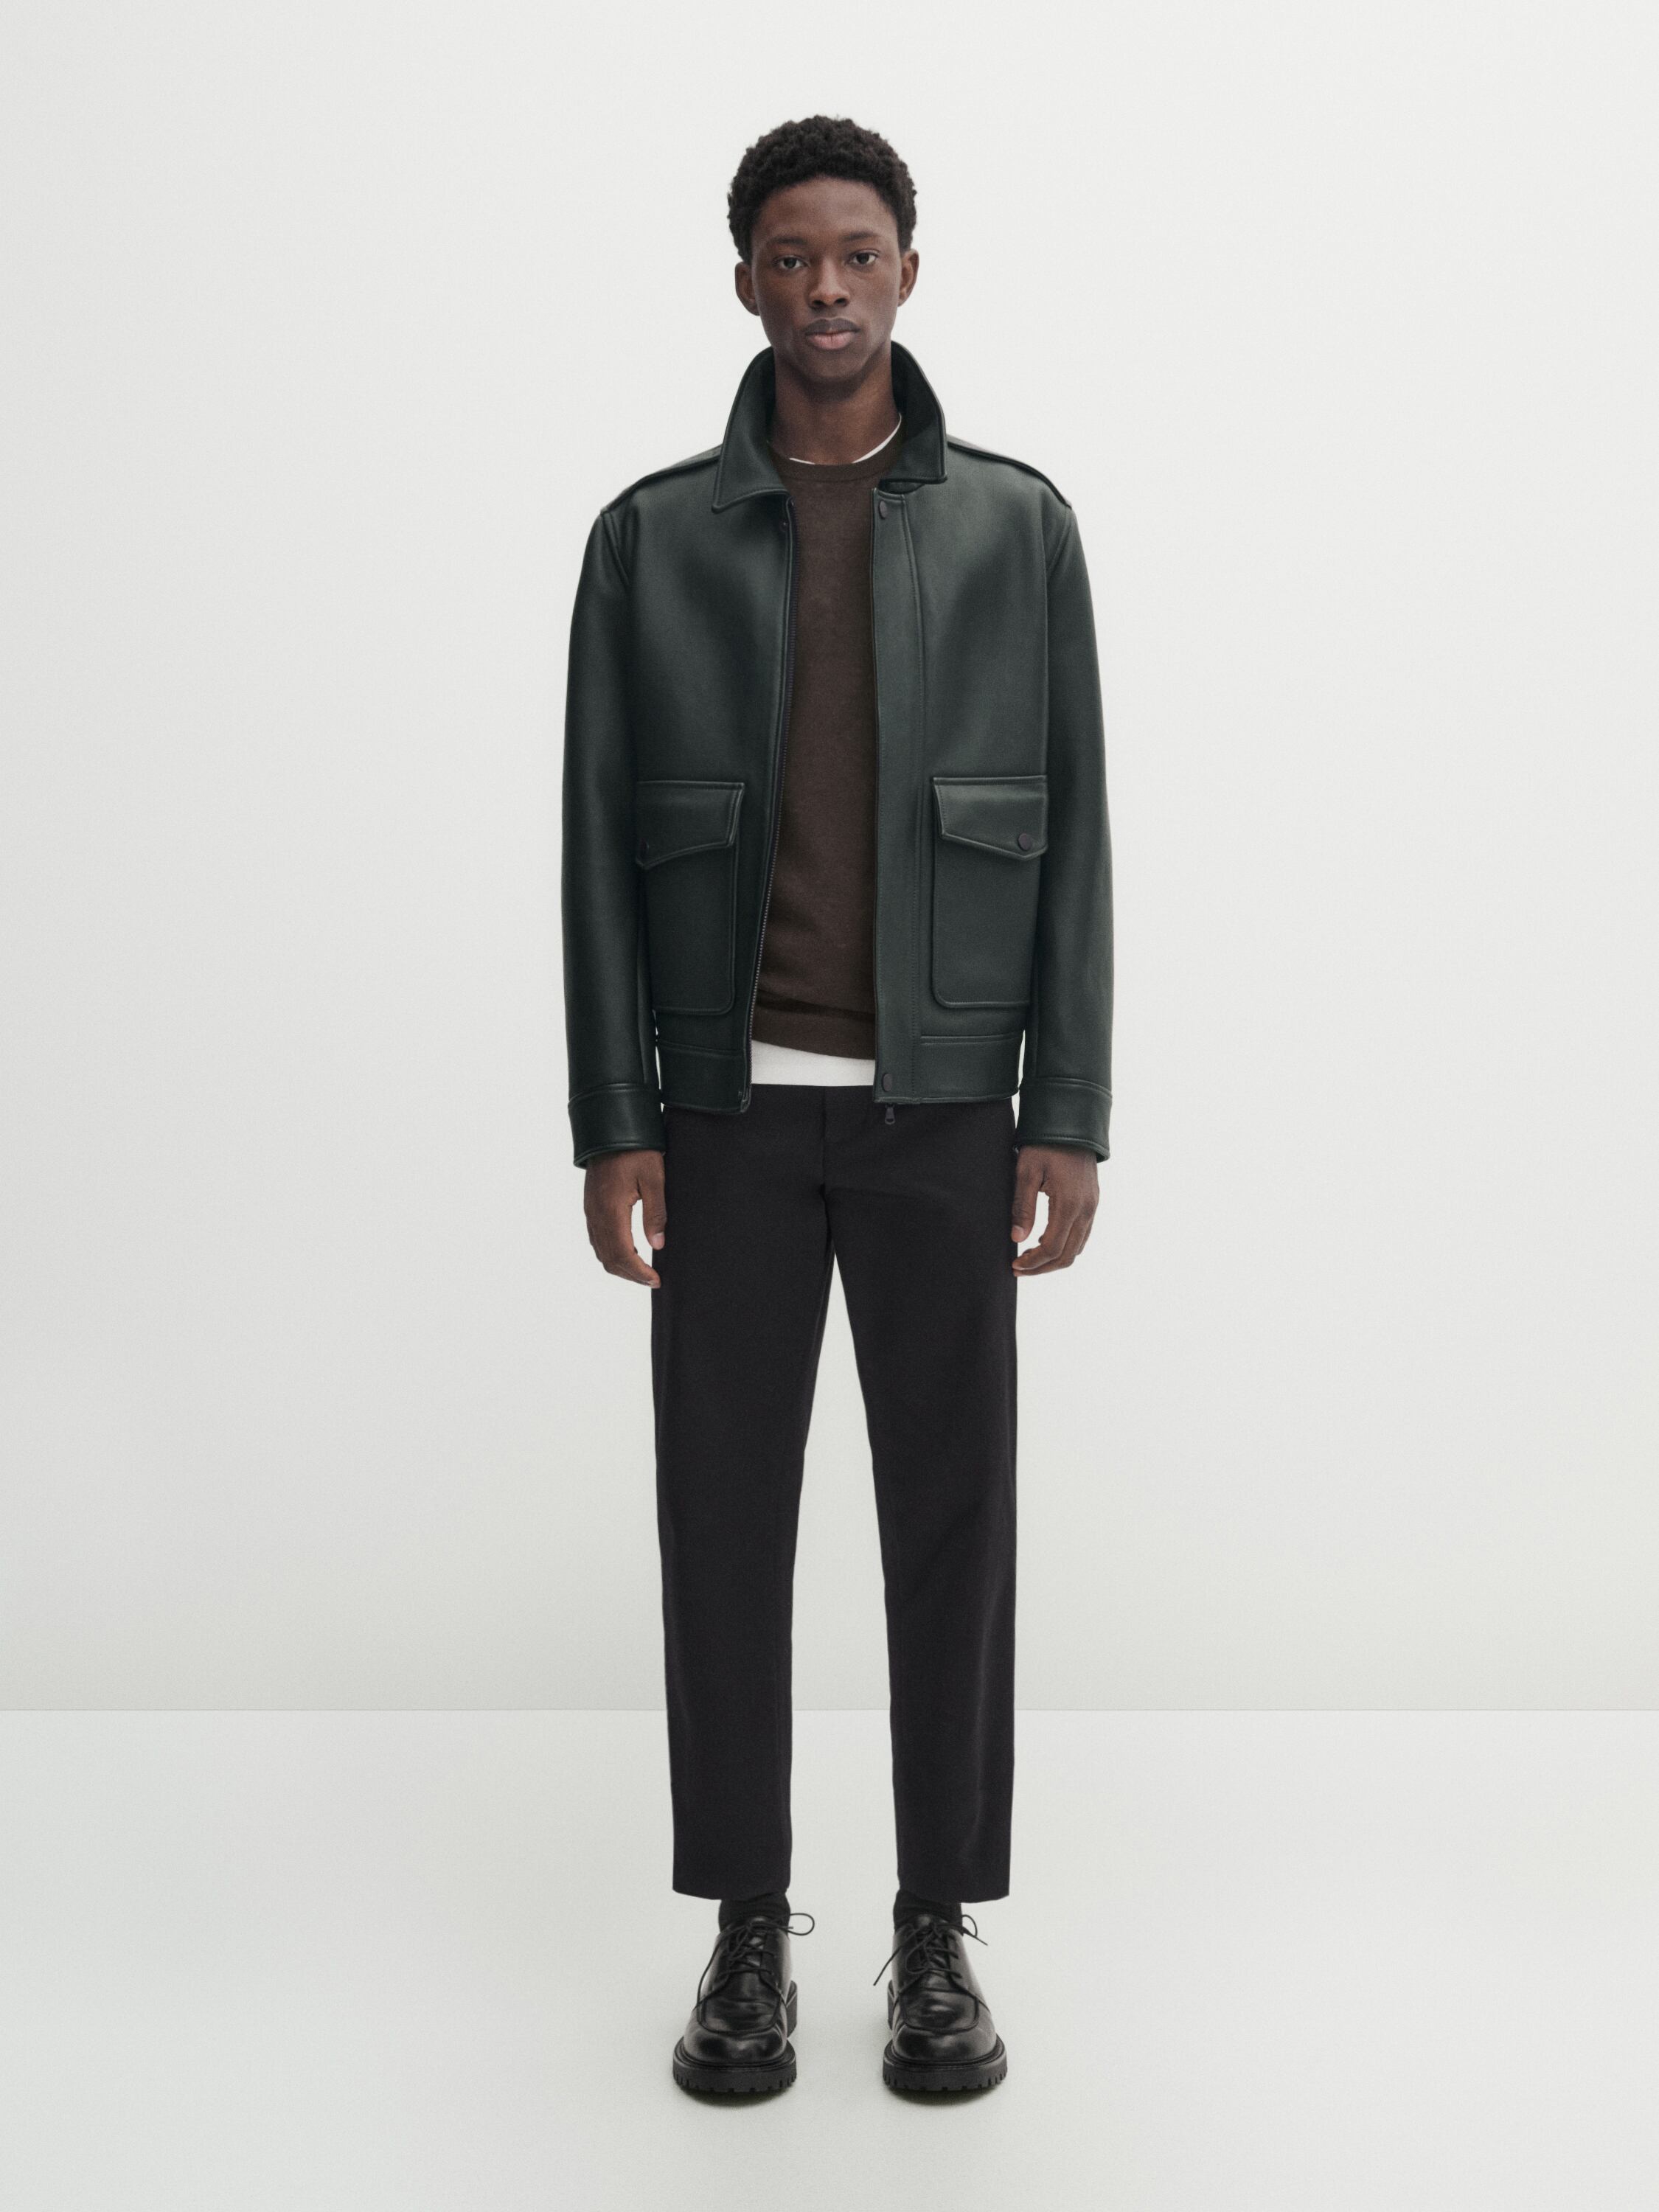 Nappa leather jacket with pockets - Studio